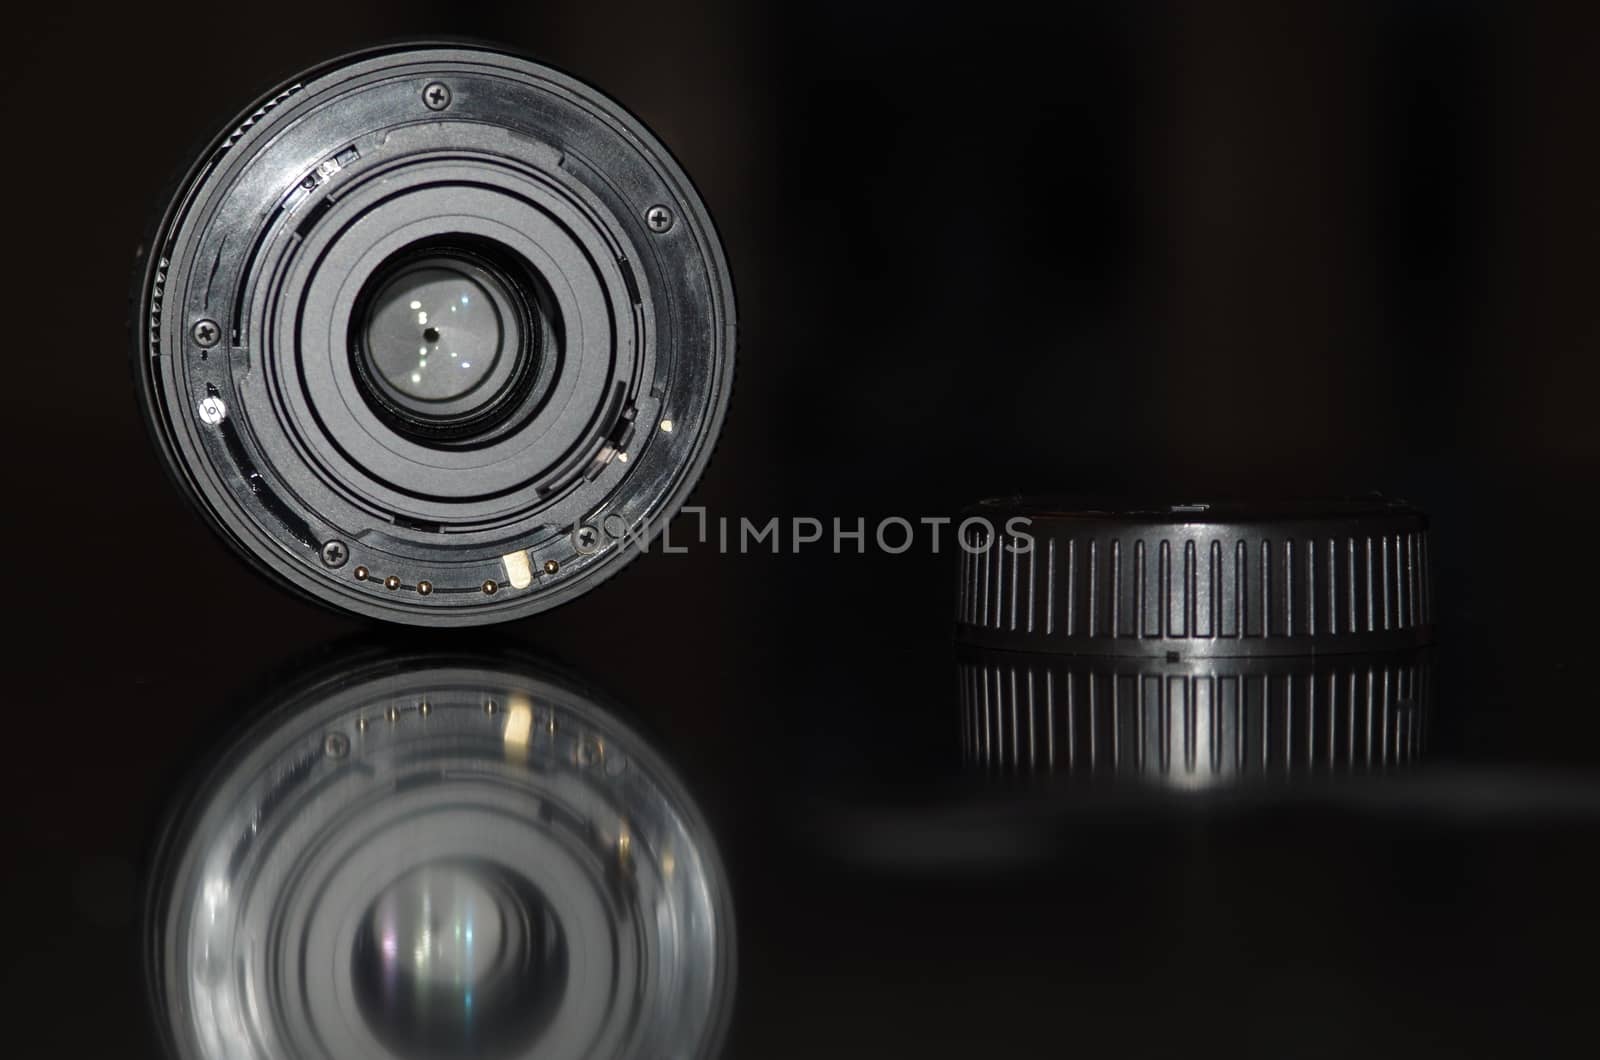 Backside of a camera lens showing optical eye.